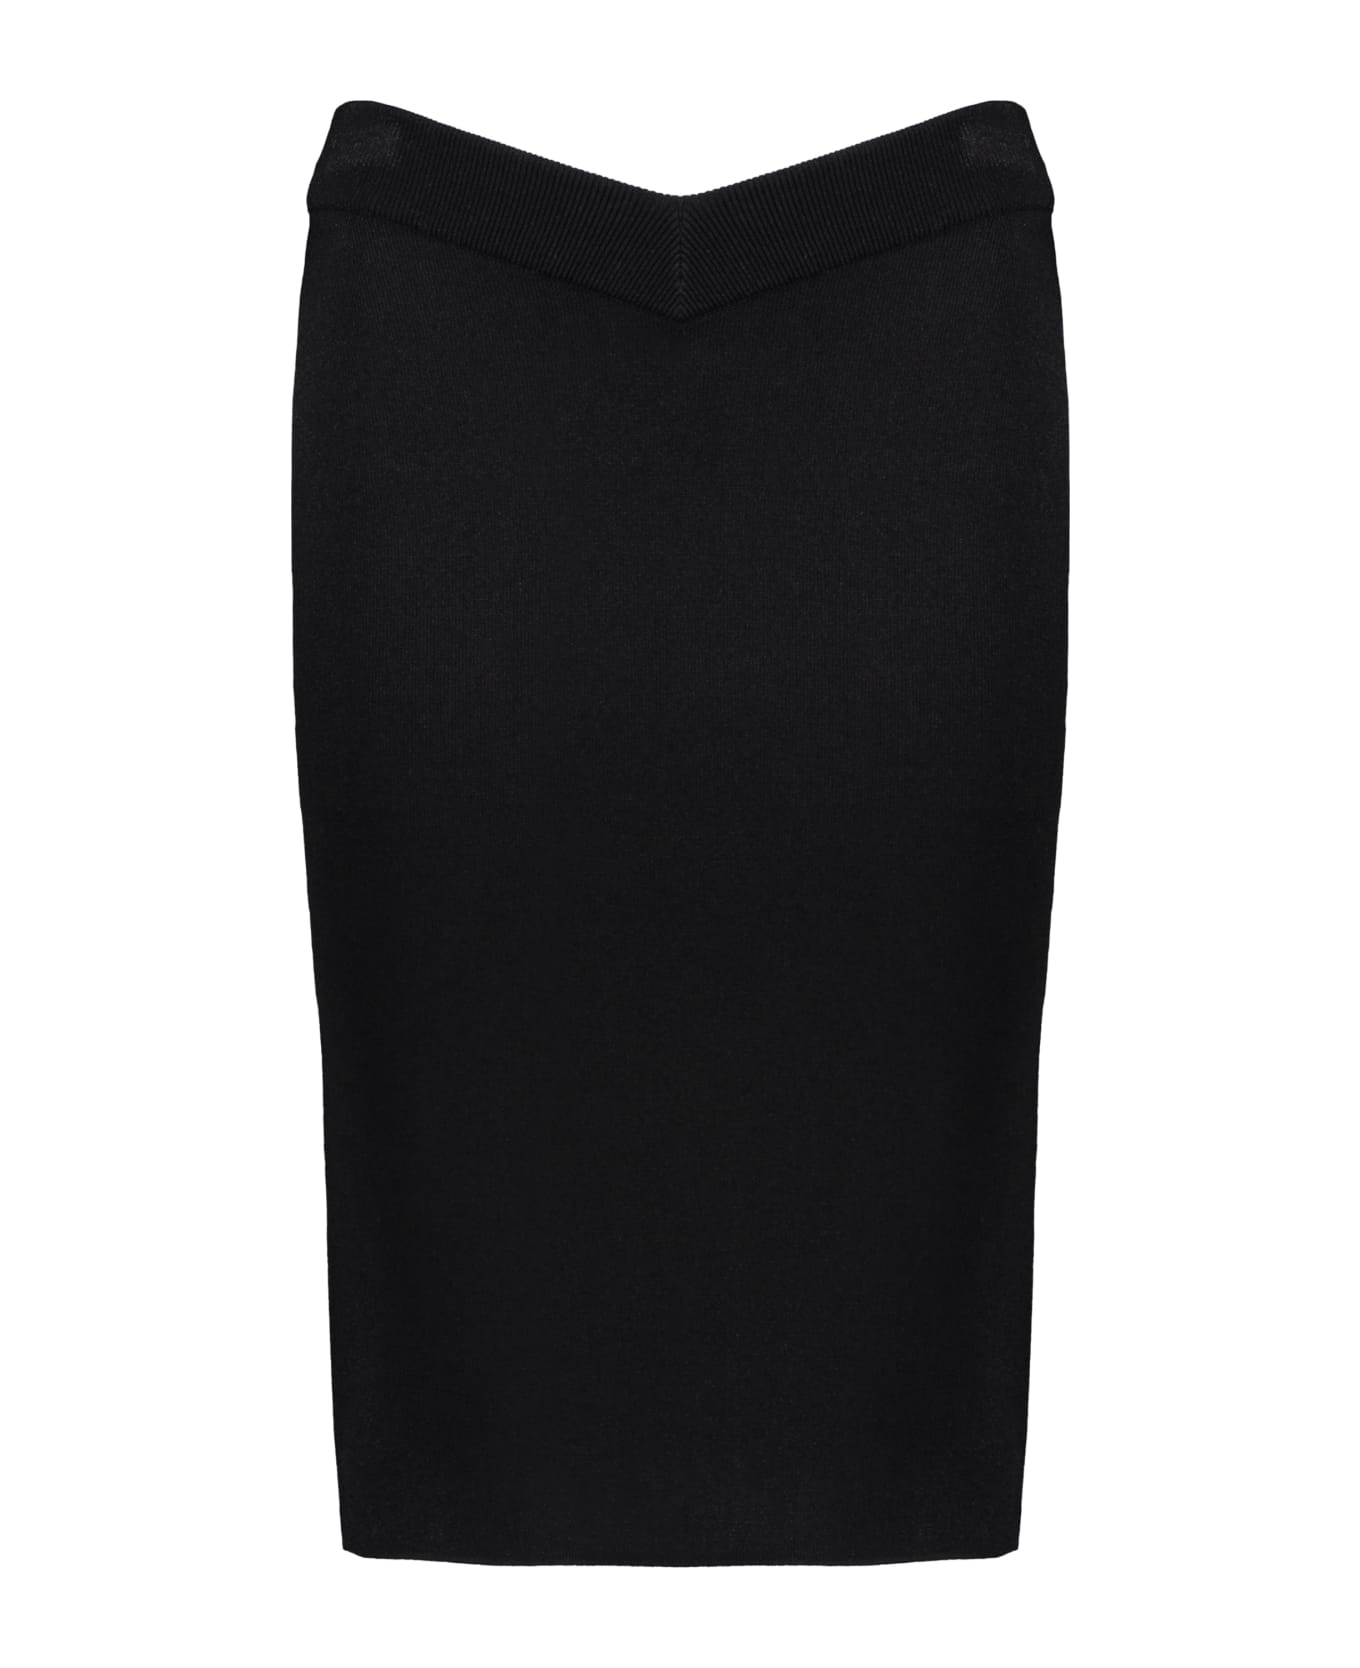 Burberry Jacquard Knit Skirt - black スカート